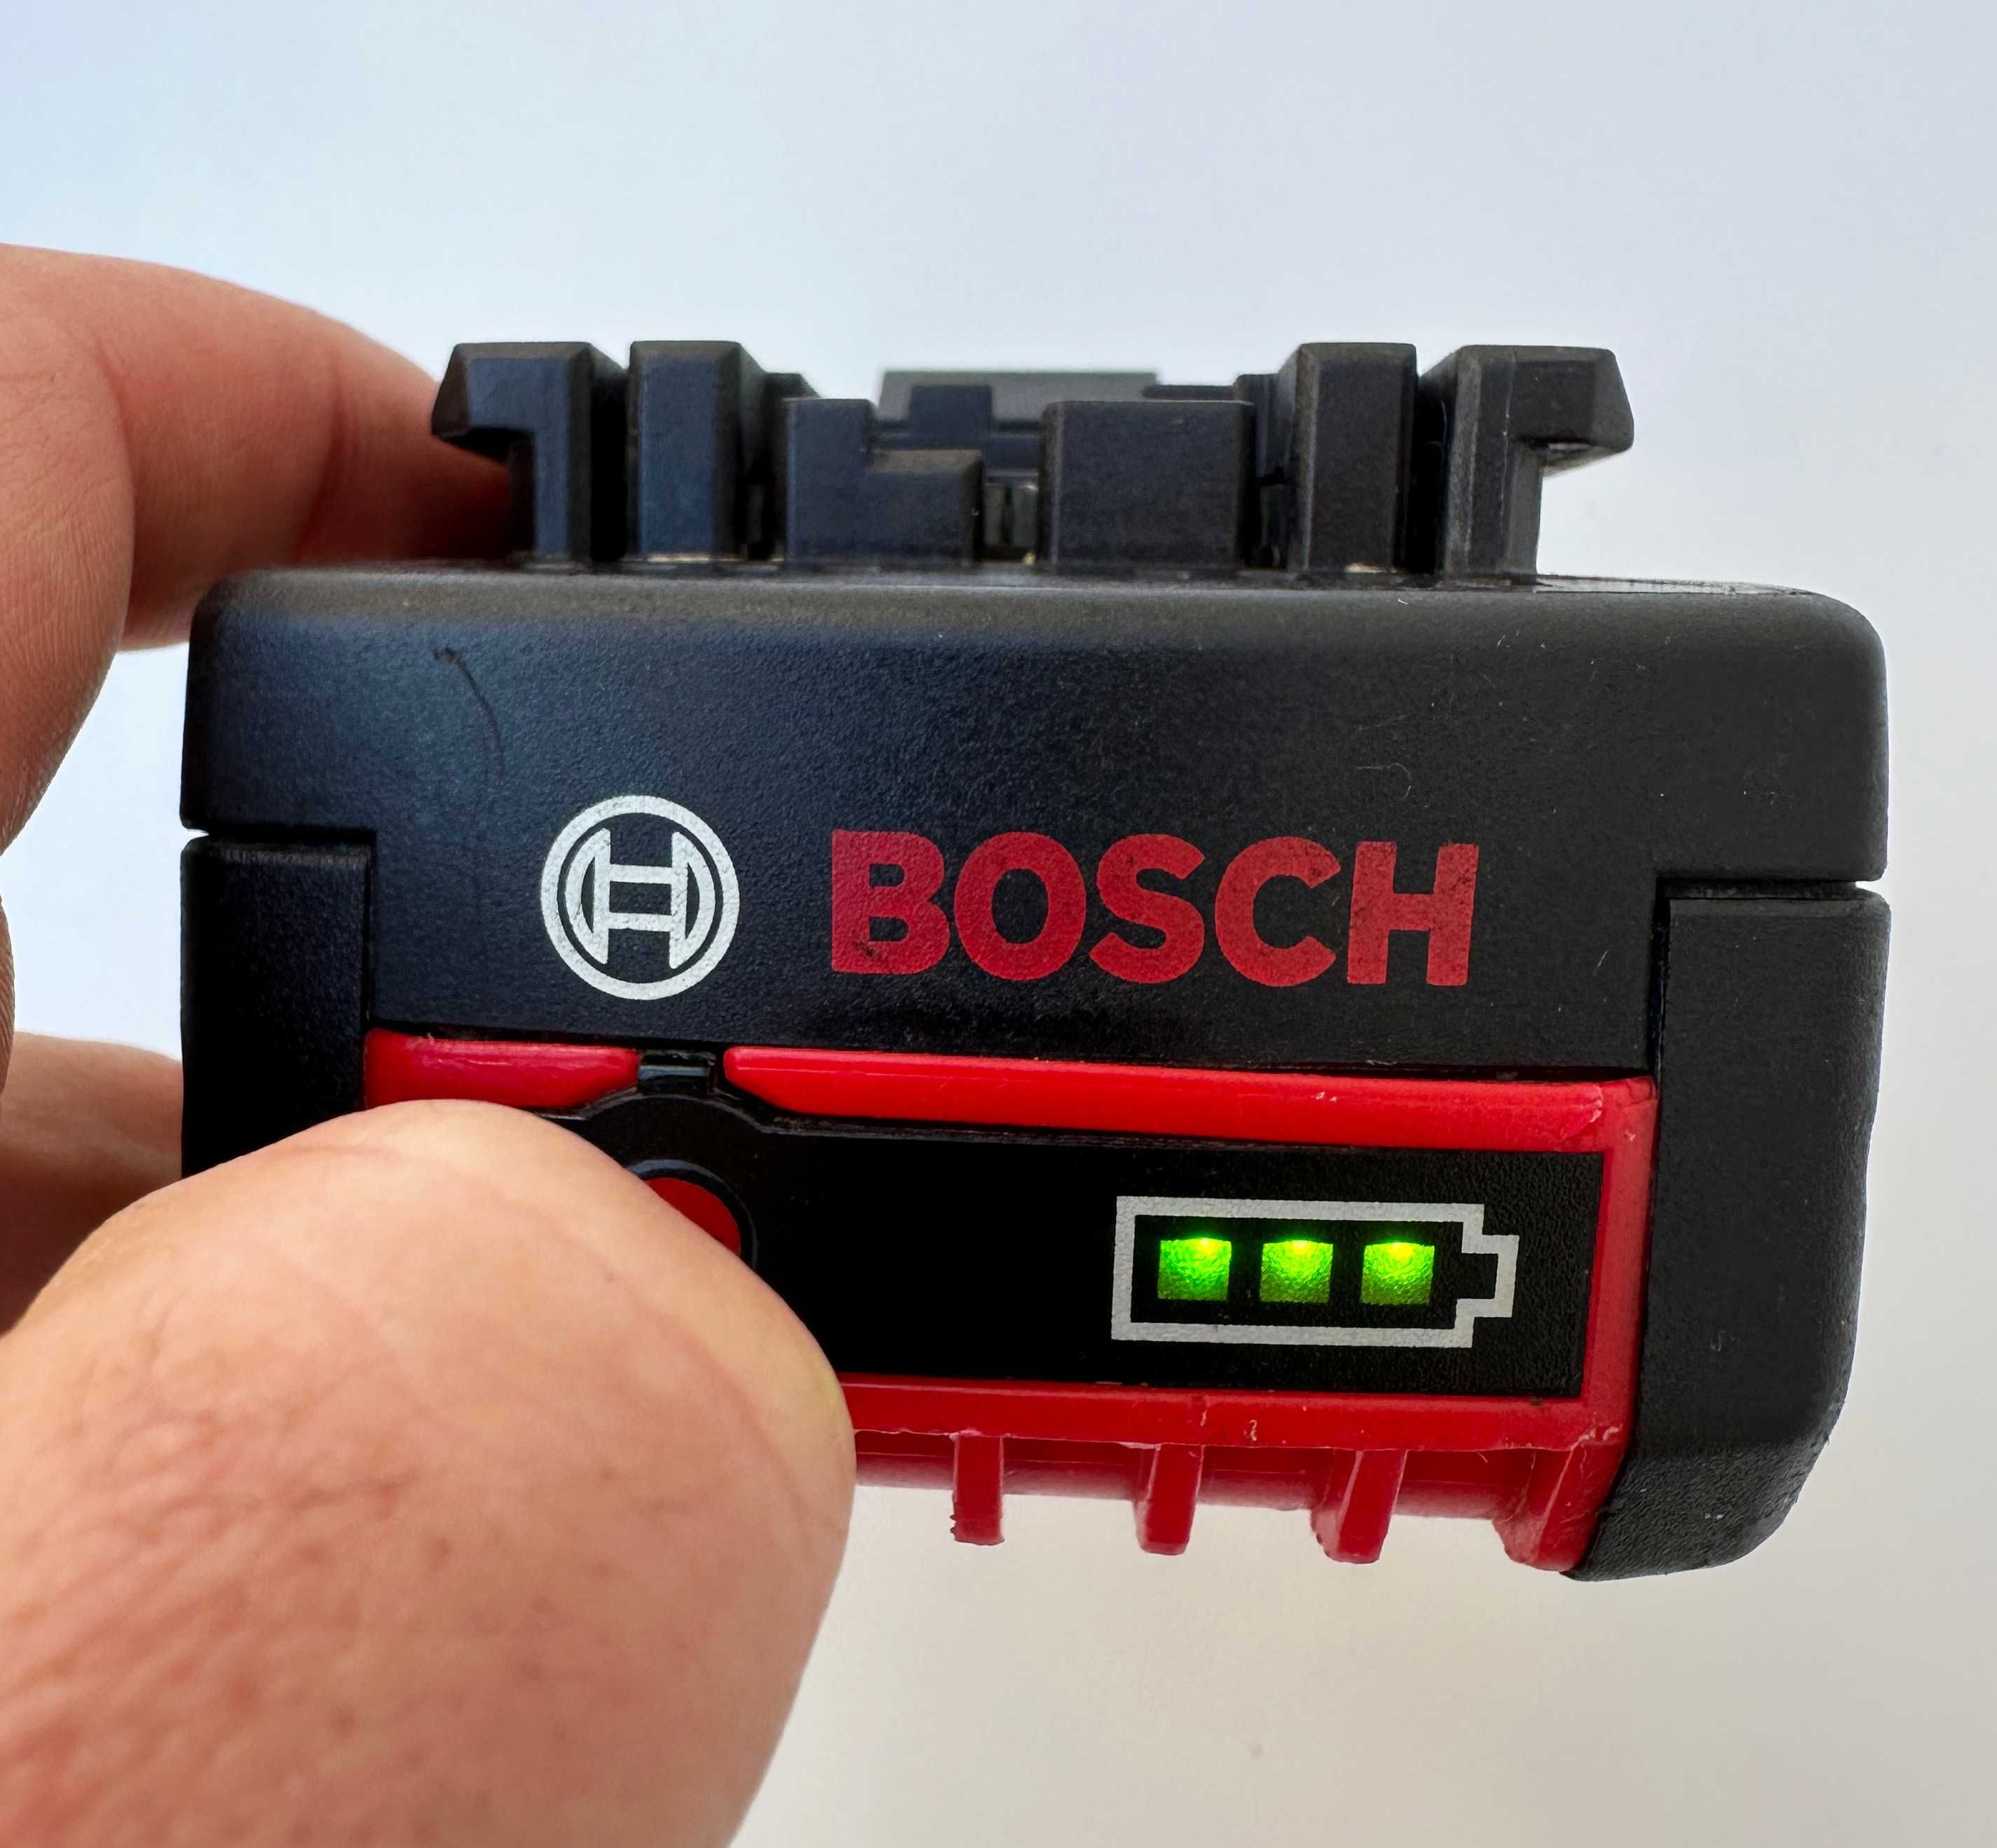 BOSCH AL 1860 CV зарядно устройство и BOSCH GBA 14,4V 4.0Ah батерия